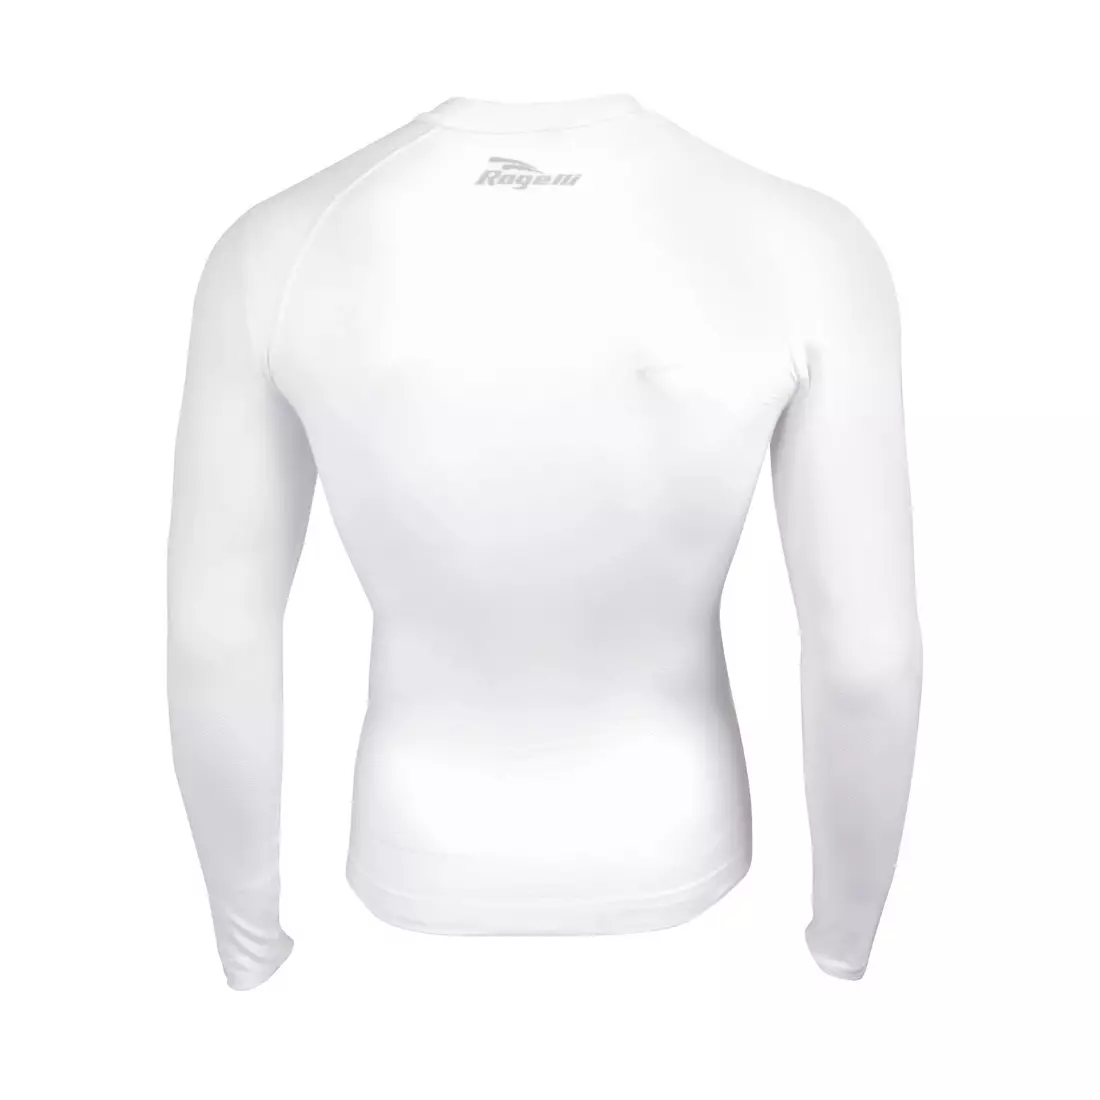 ROGELLI SKINLIFE - termo fehérnemű - D/R póló